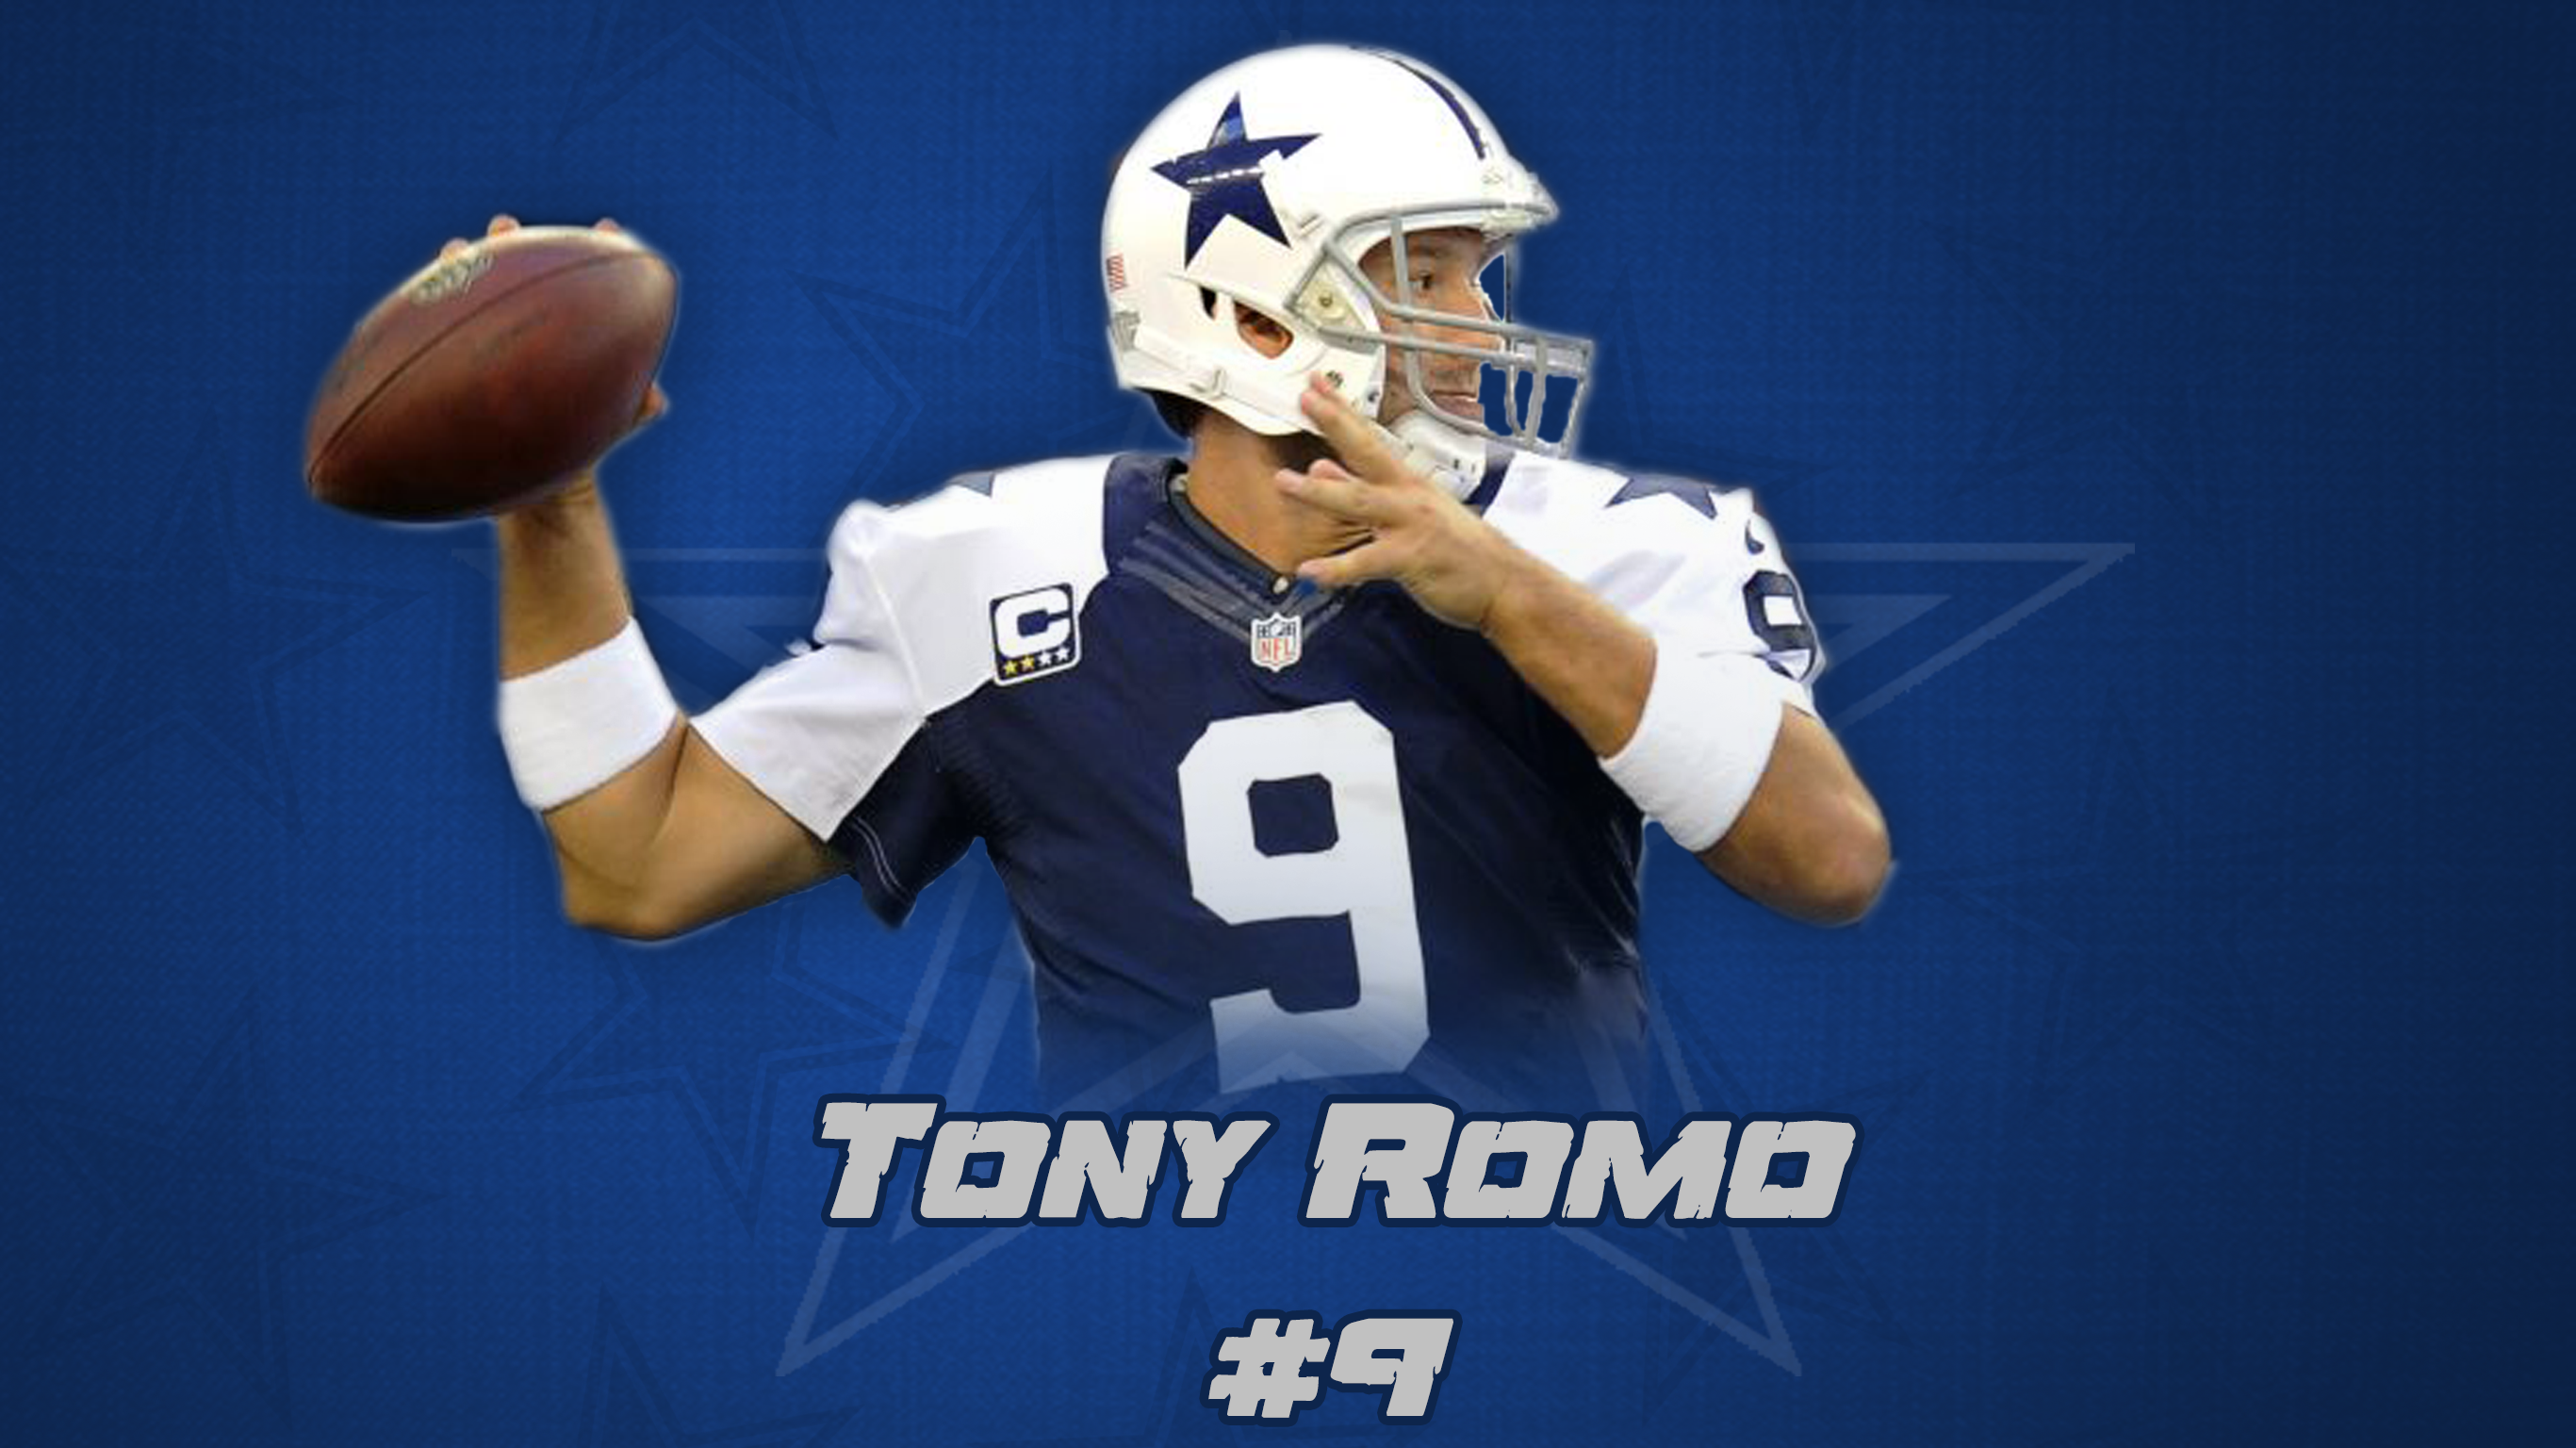 Tony Romo Wallpaper by truck90 on